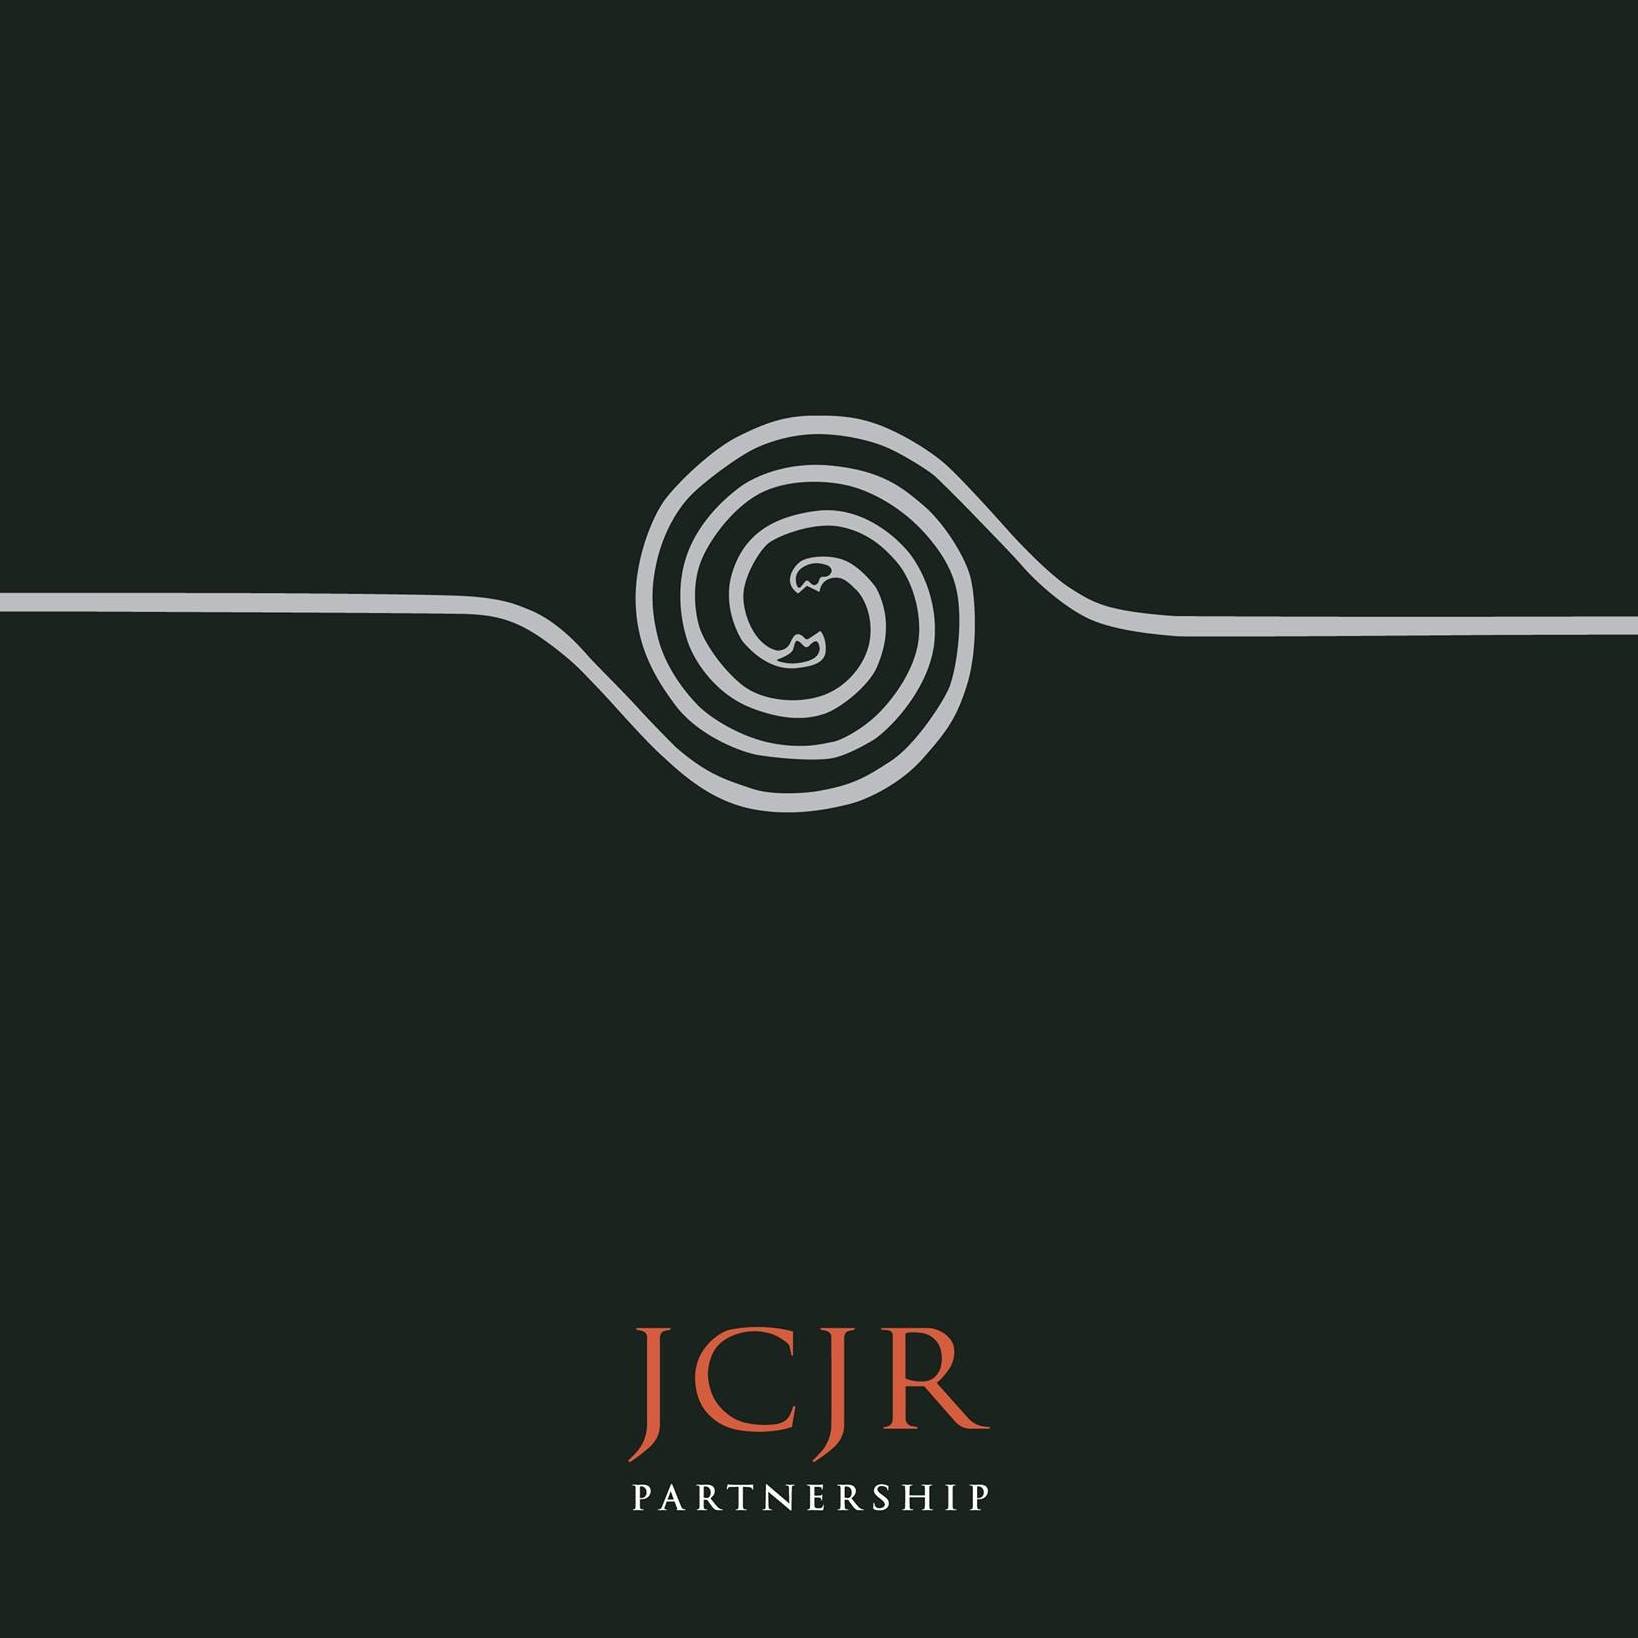 JCJR Partnership|Architect|Professional Services